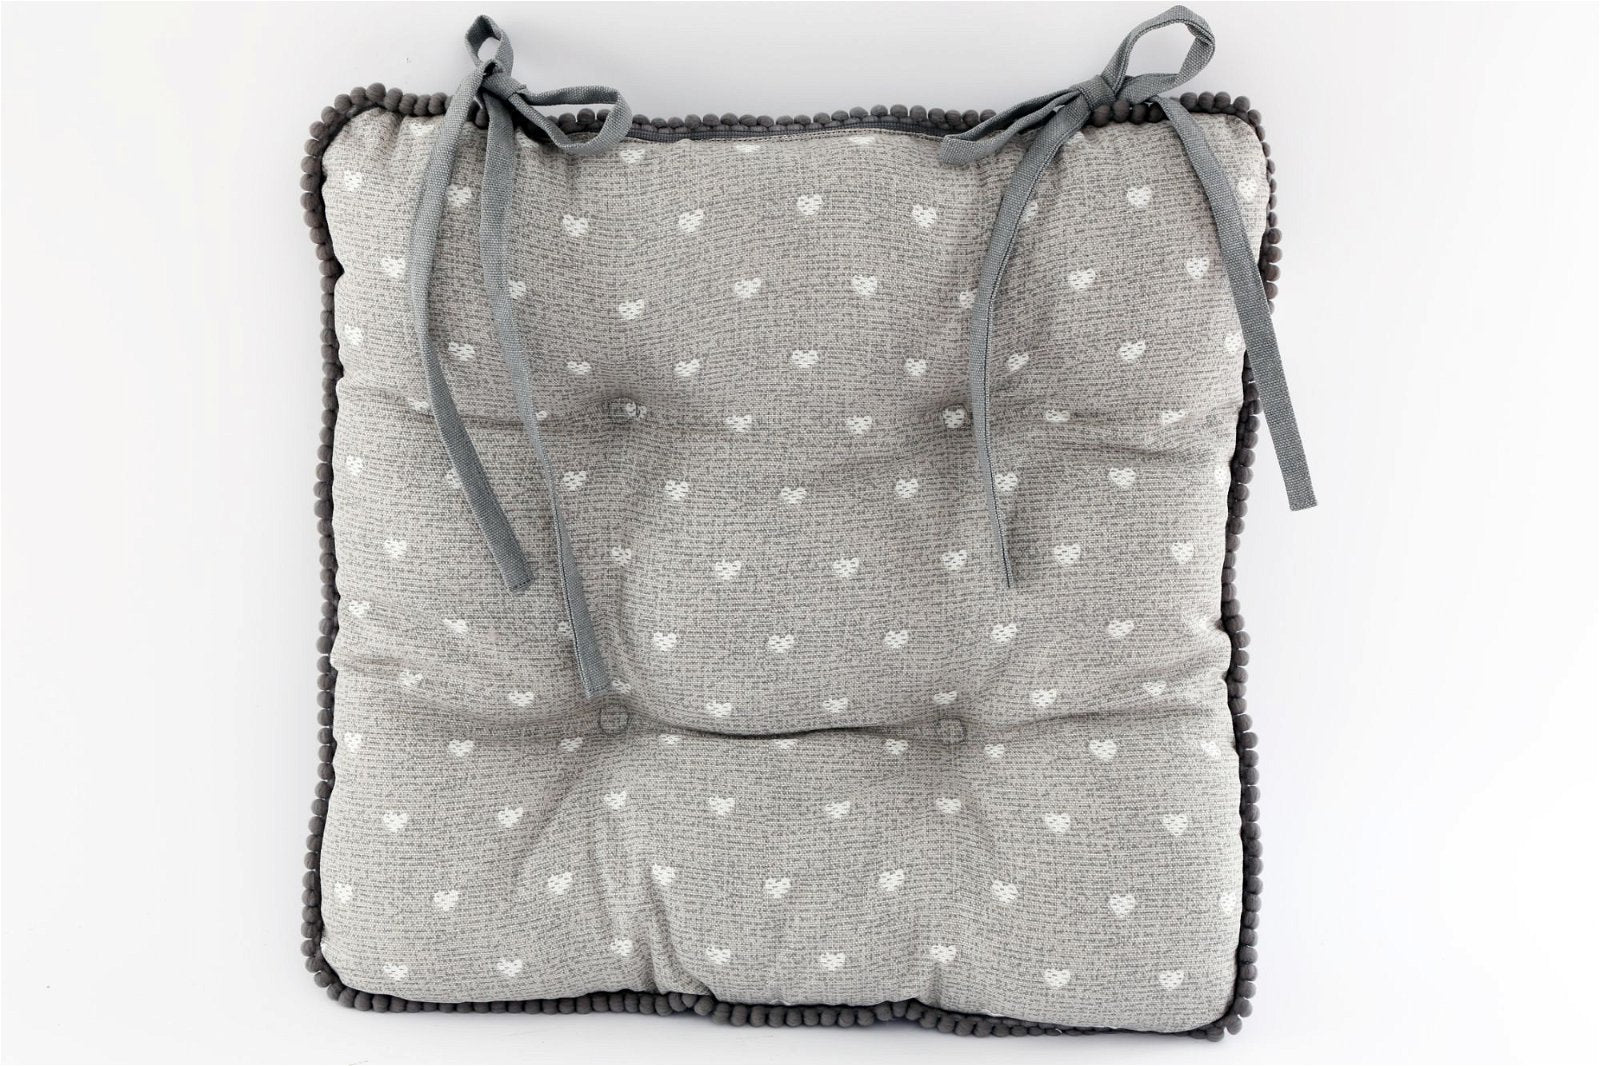 Fabric Seat Pad With Ties In Grey Heart Print Design - Kaftan direct